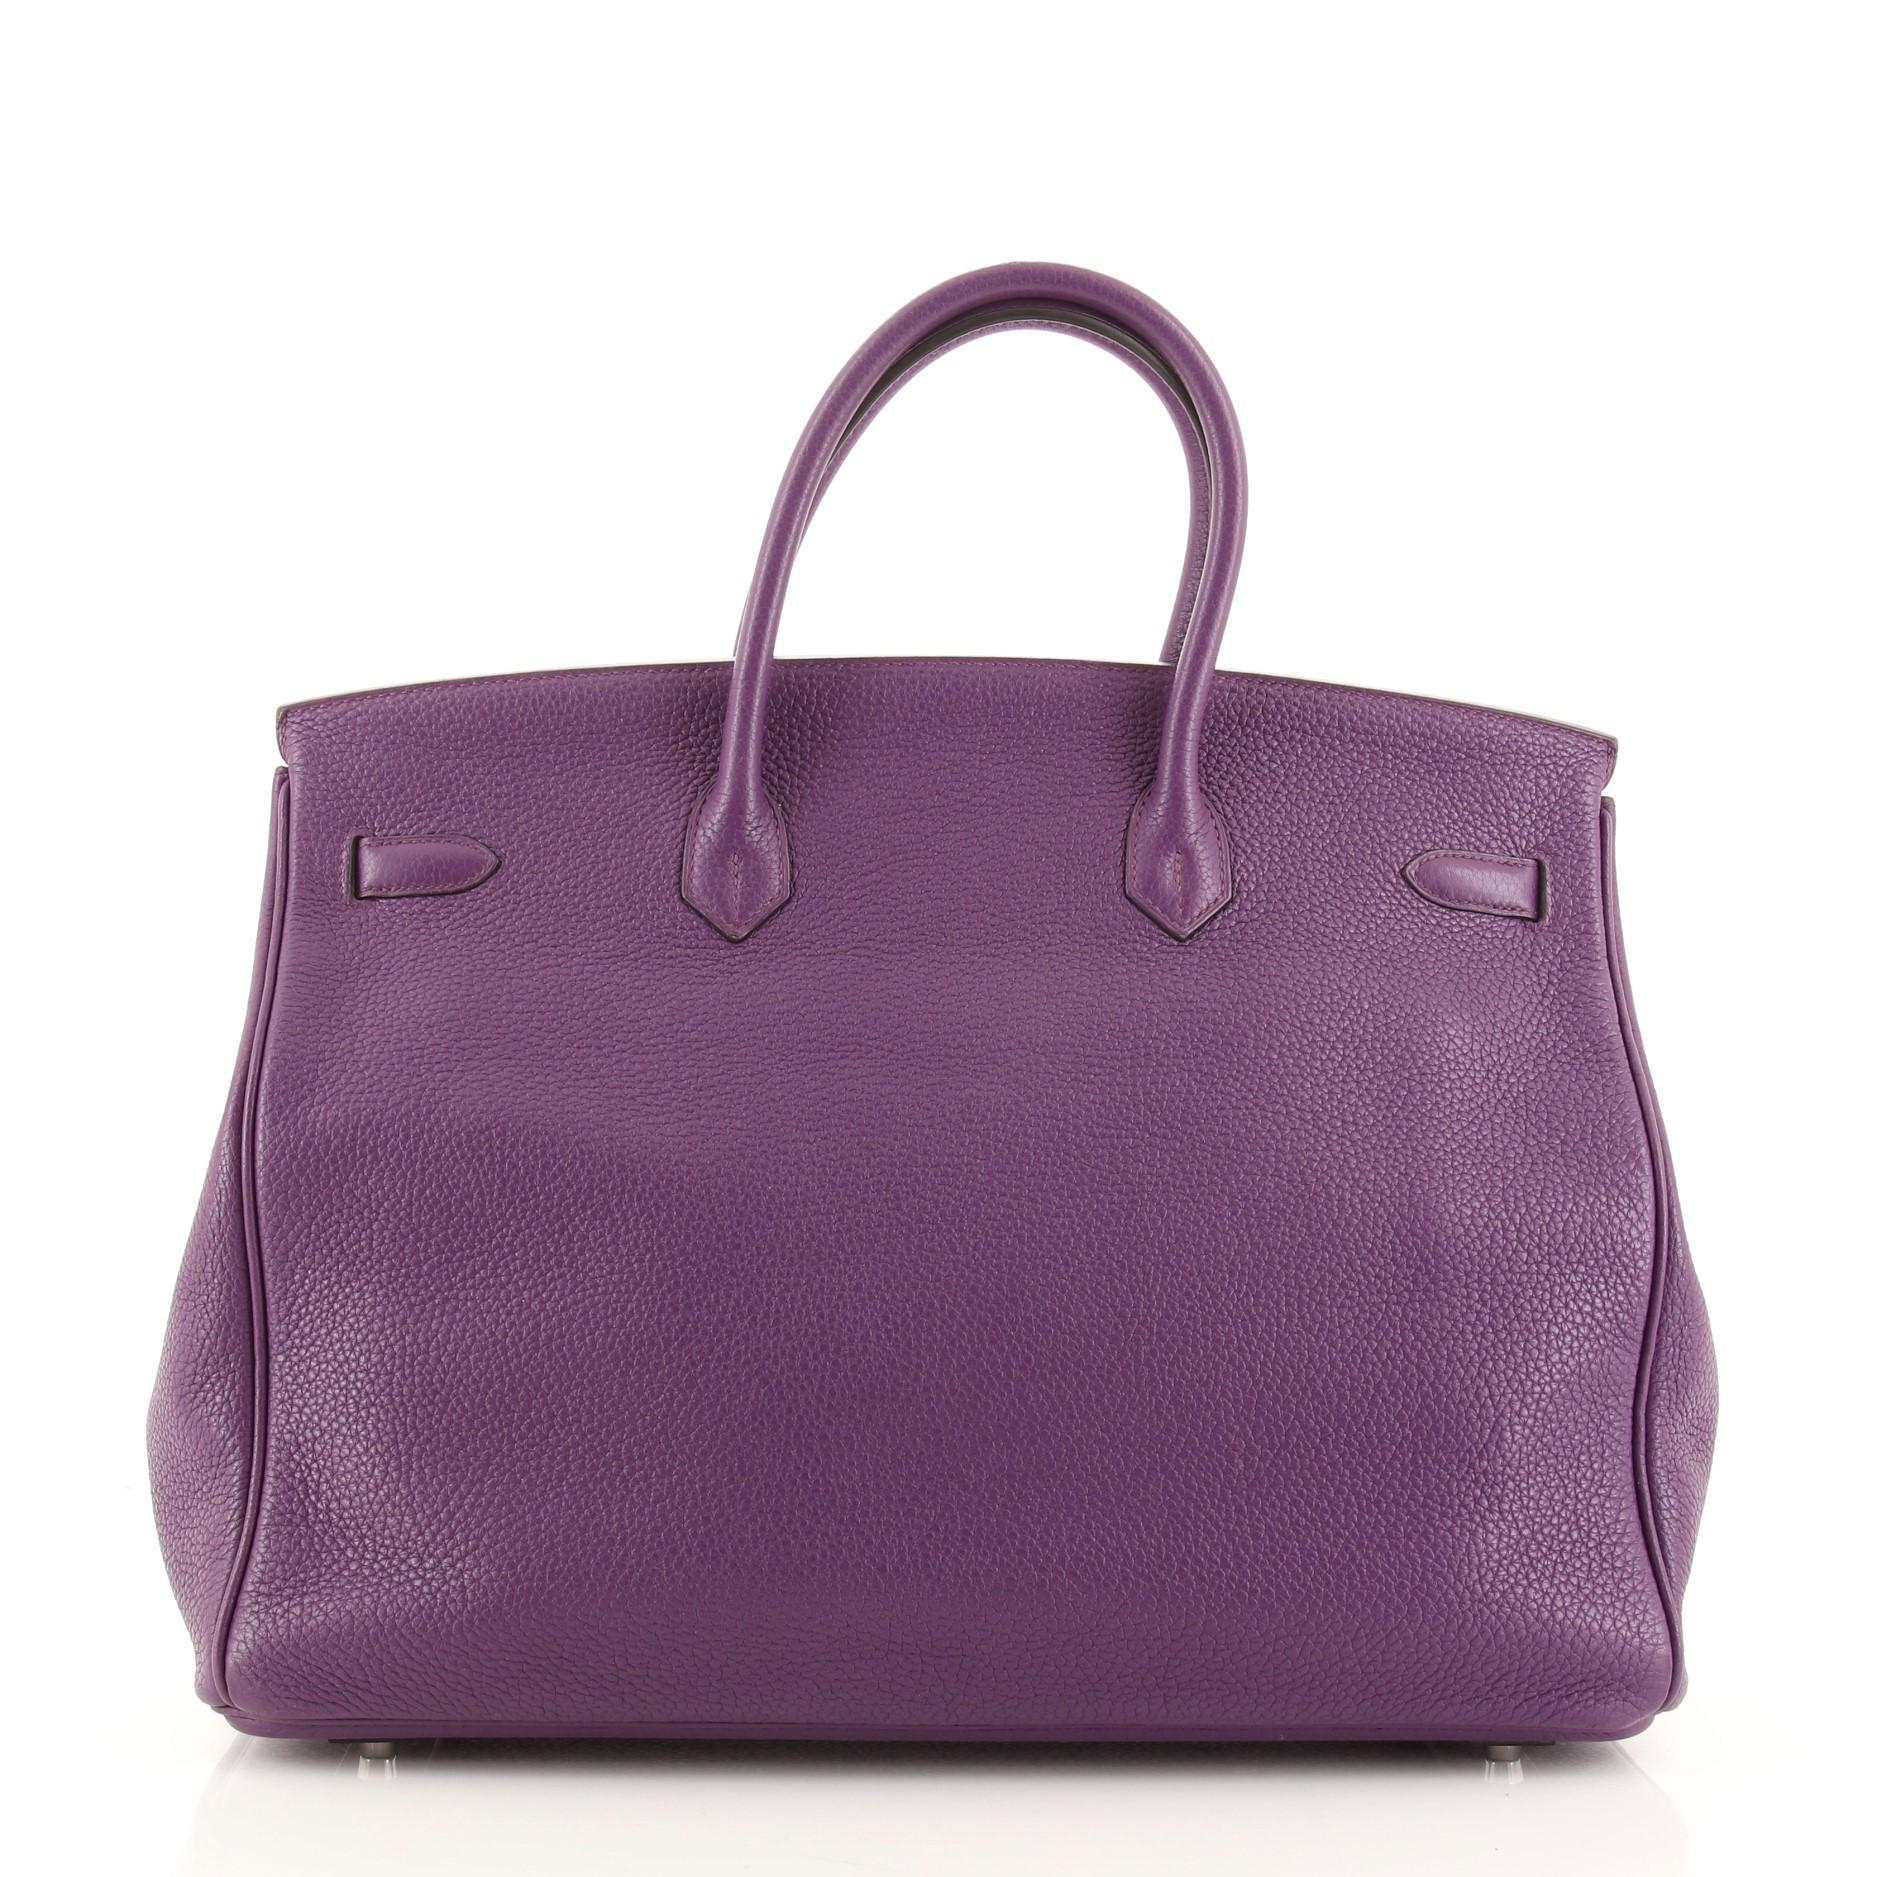 Gray Hermes Birkin Handbag Ultraviolet Clemence with Palladium Hardware 40